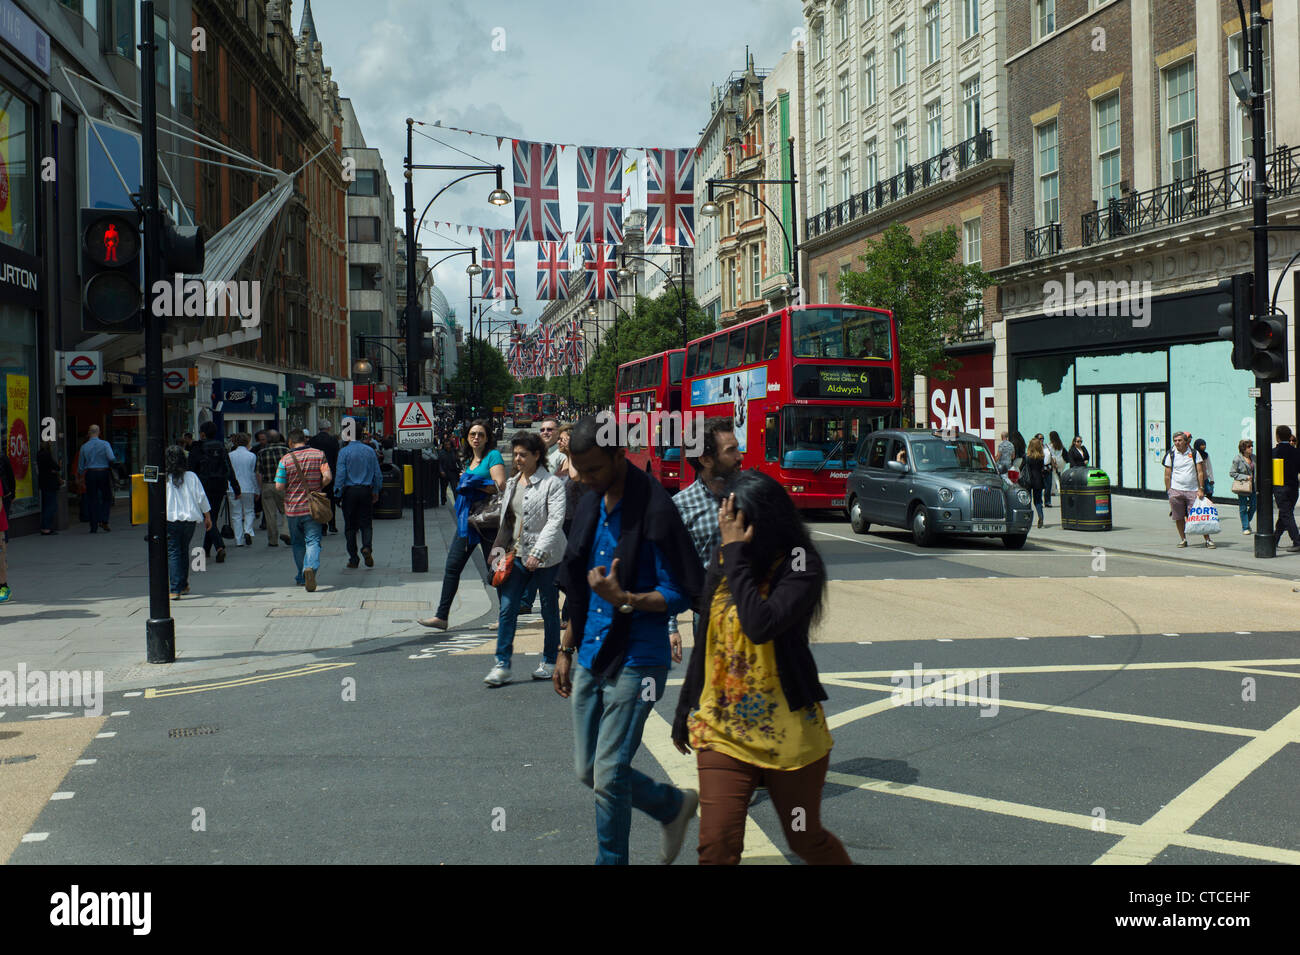 Shoppers dans Oxford Street, London, West End, England UK Banque D'Images